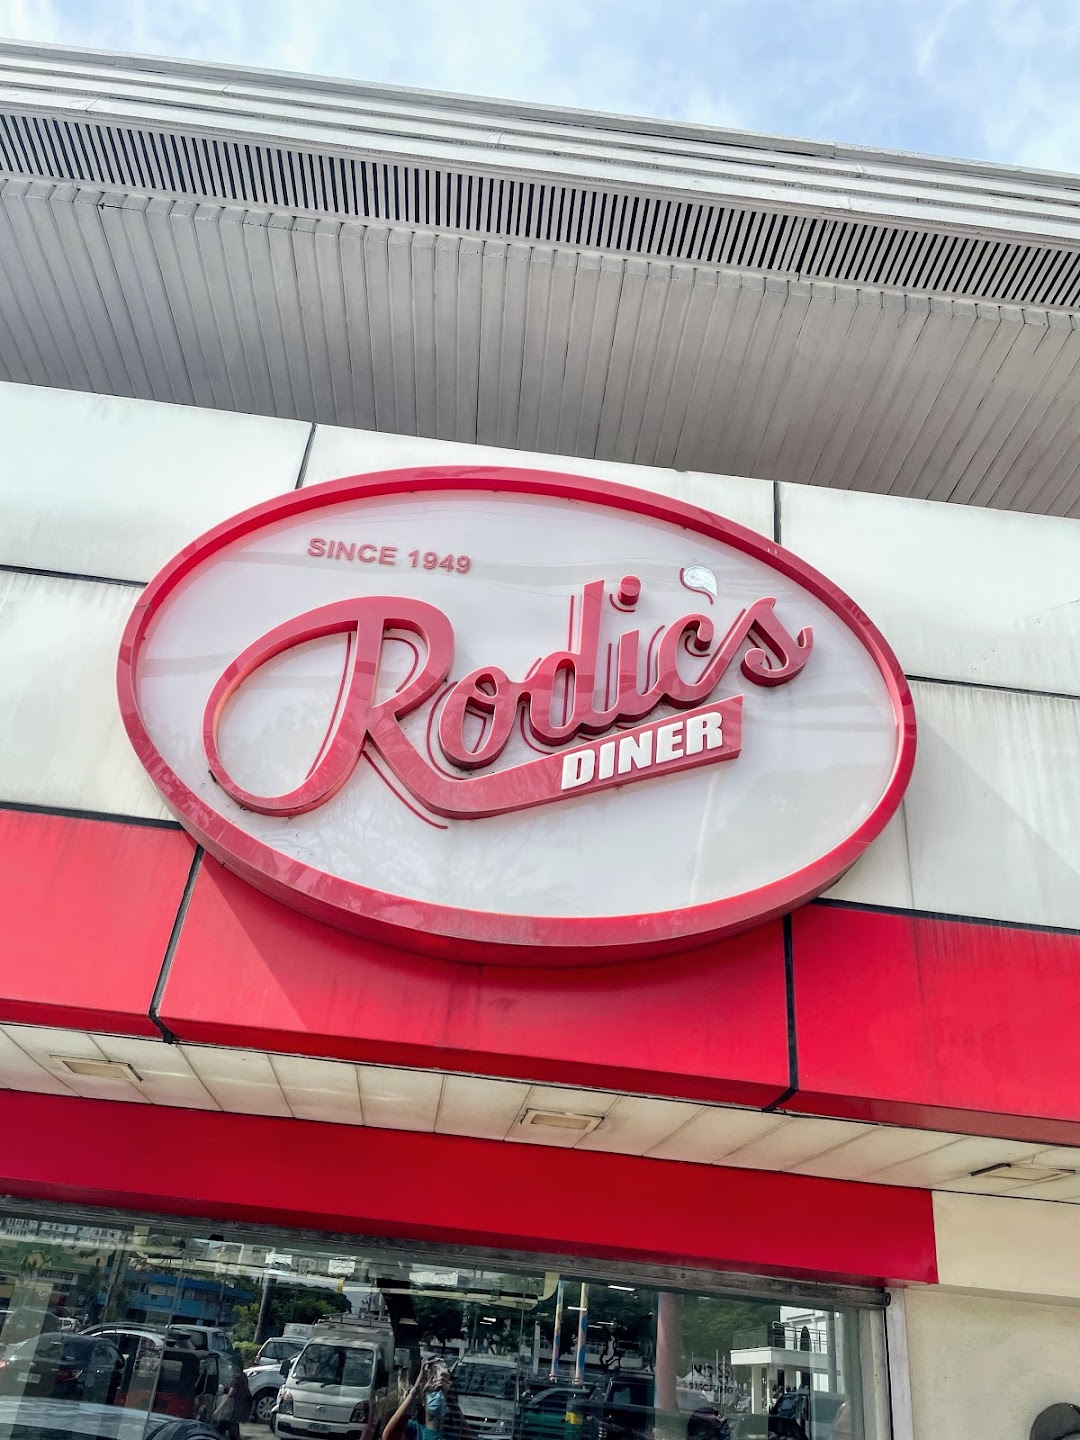 Rodics Diner